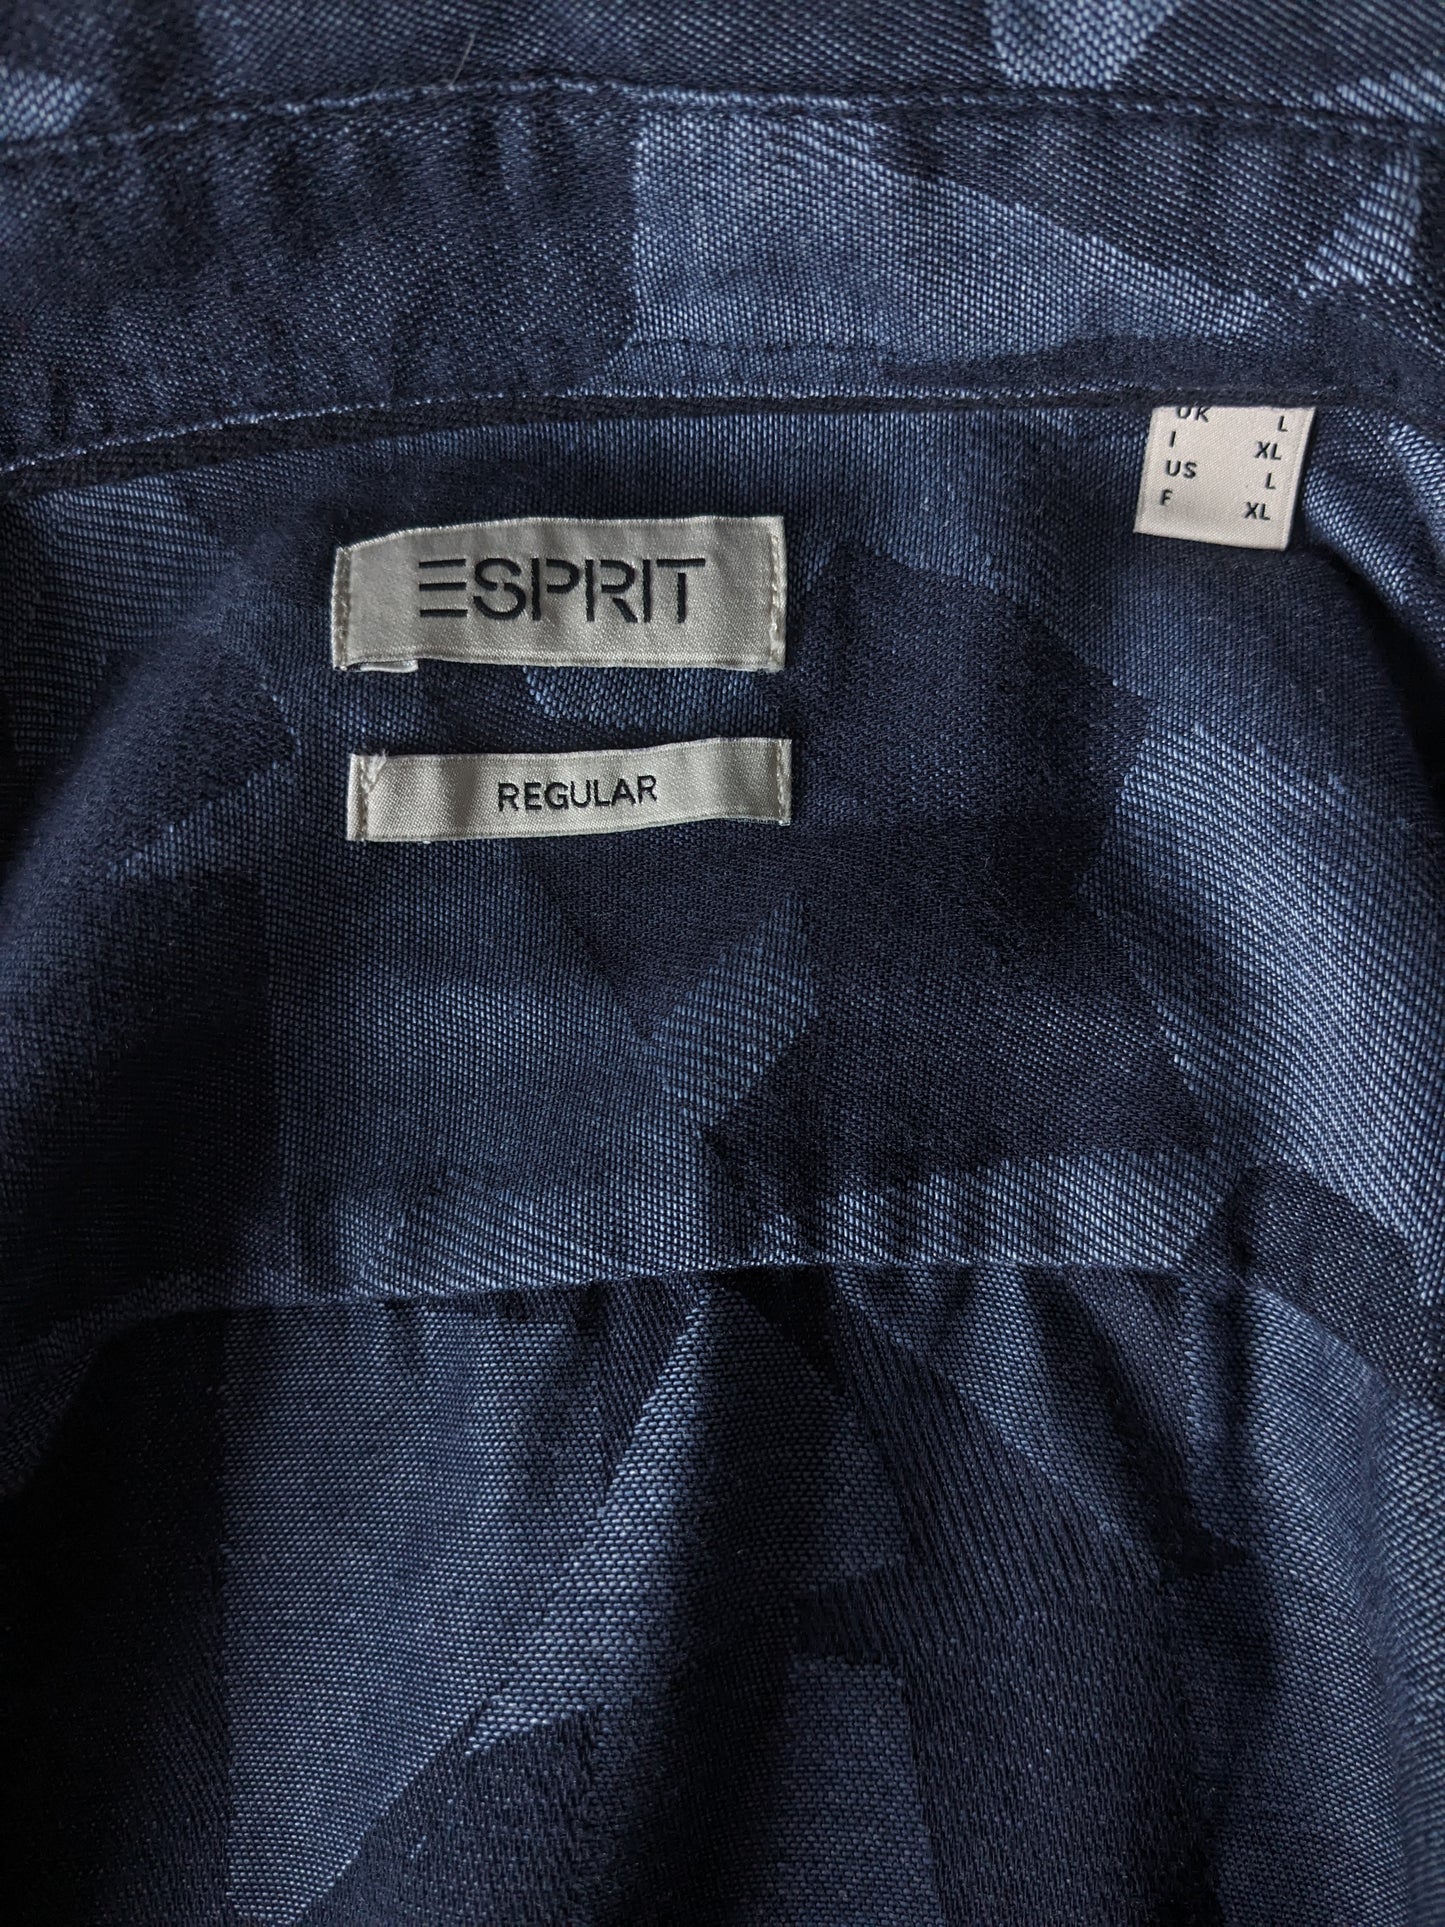 Esprit -Shirt. Blaudruck. Größe L. Regelmäßige Passform.